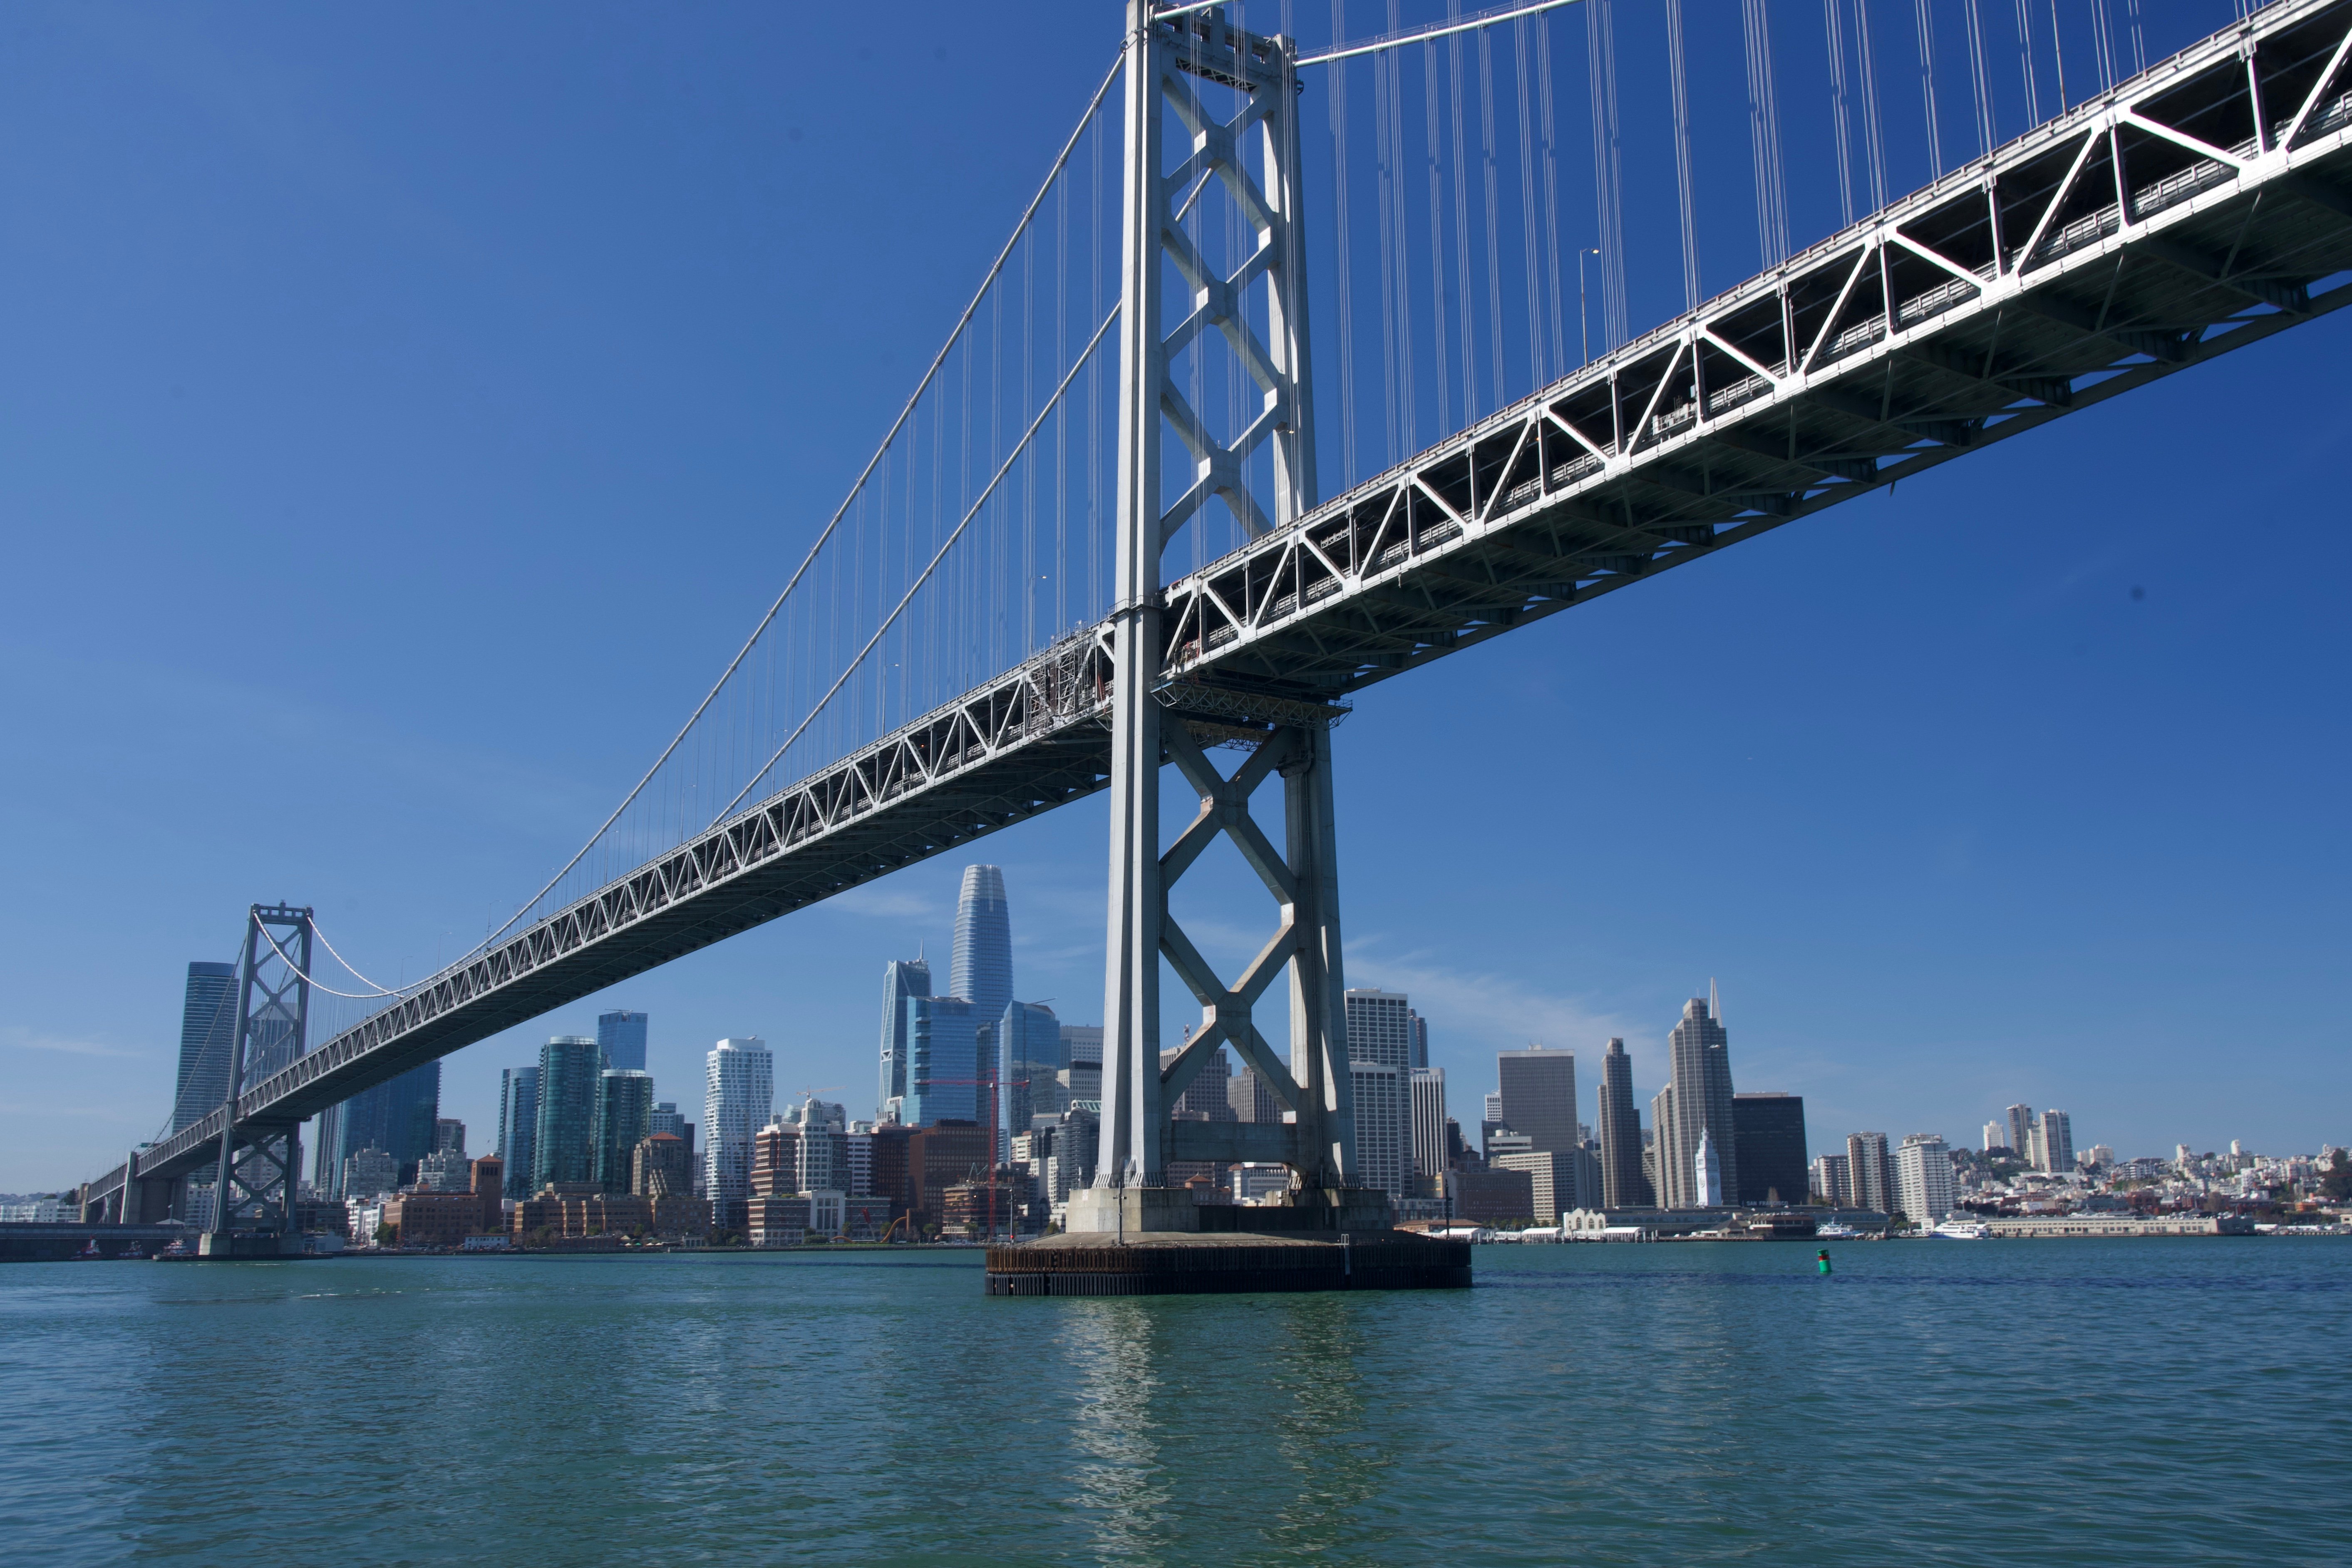 San Francisco skyline from Bay Bridge perspective